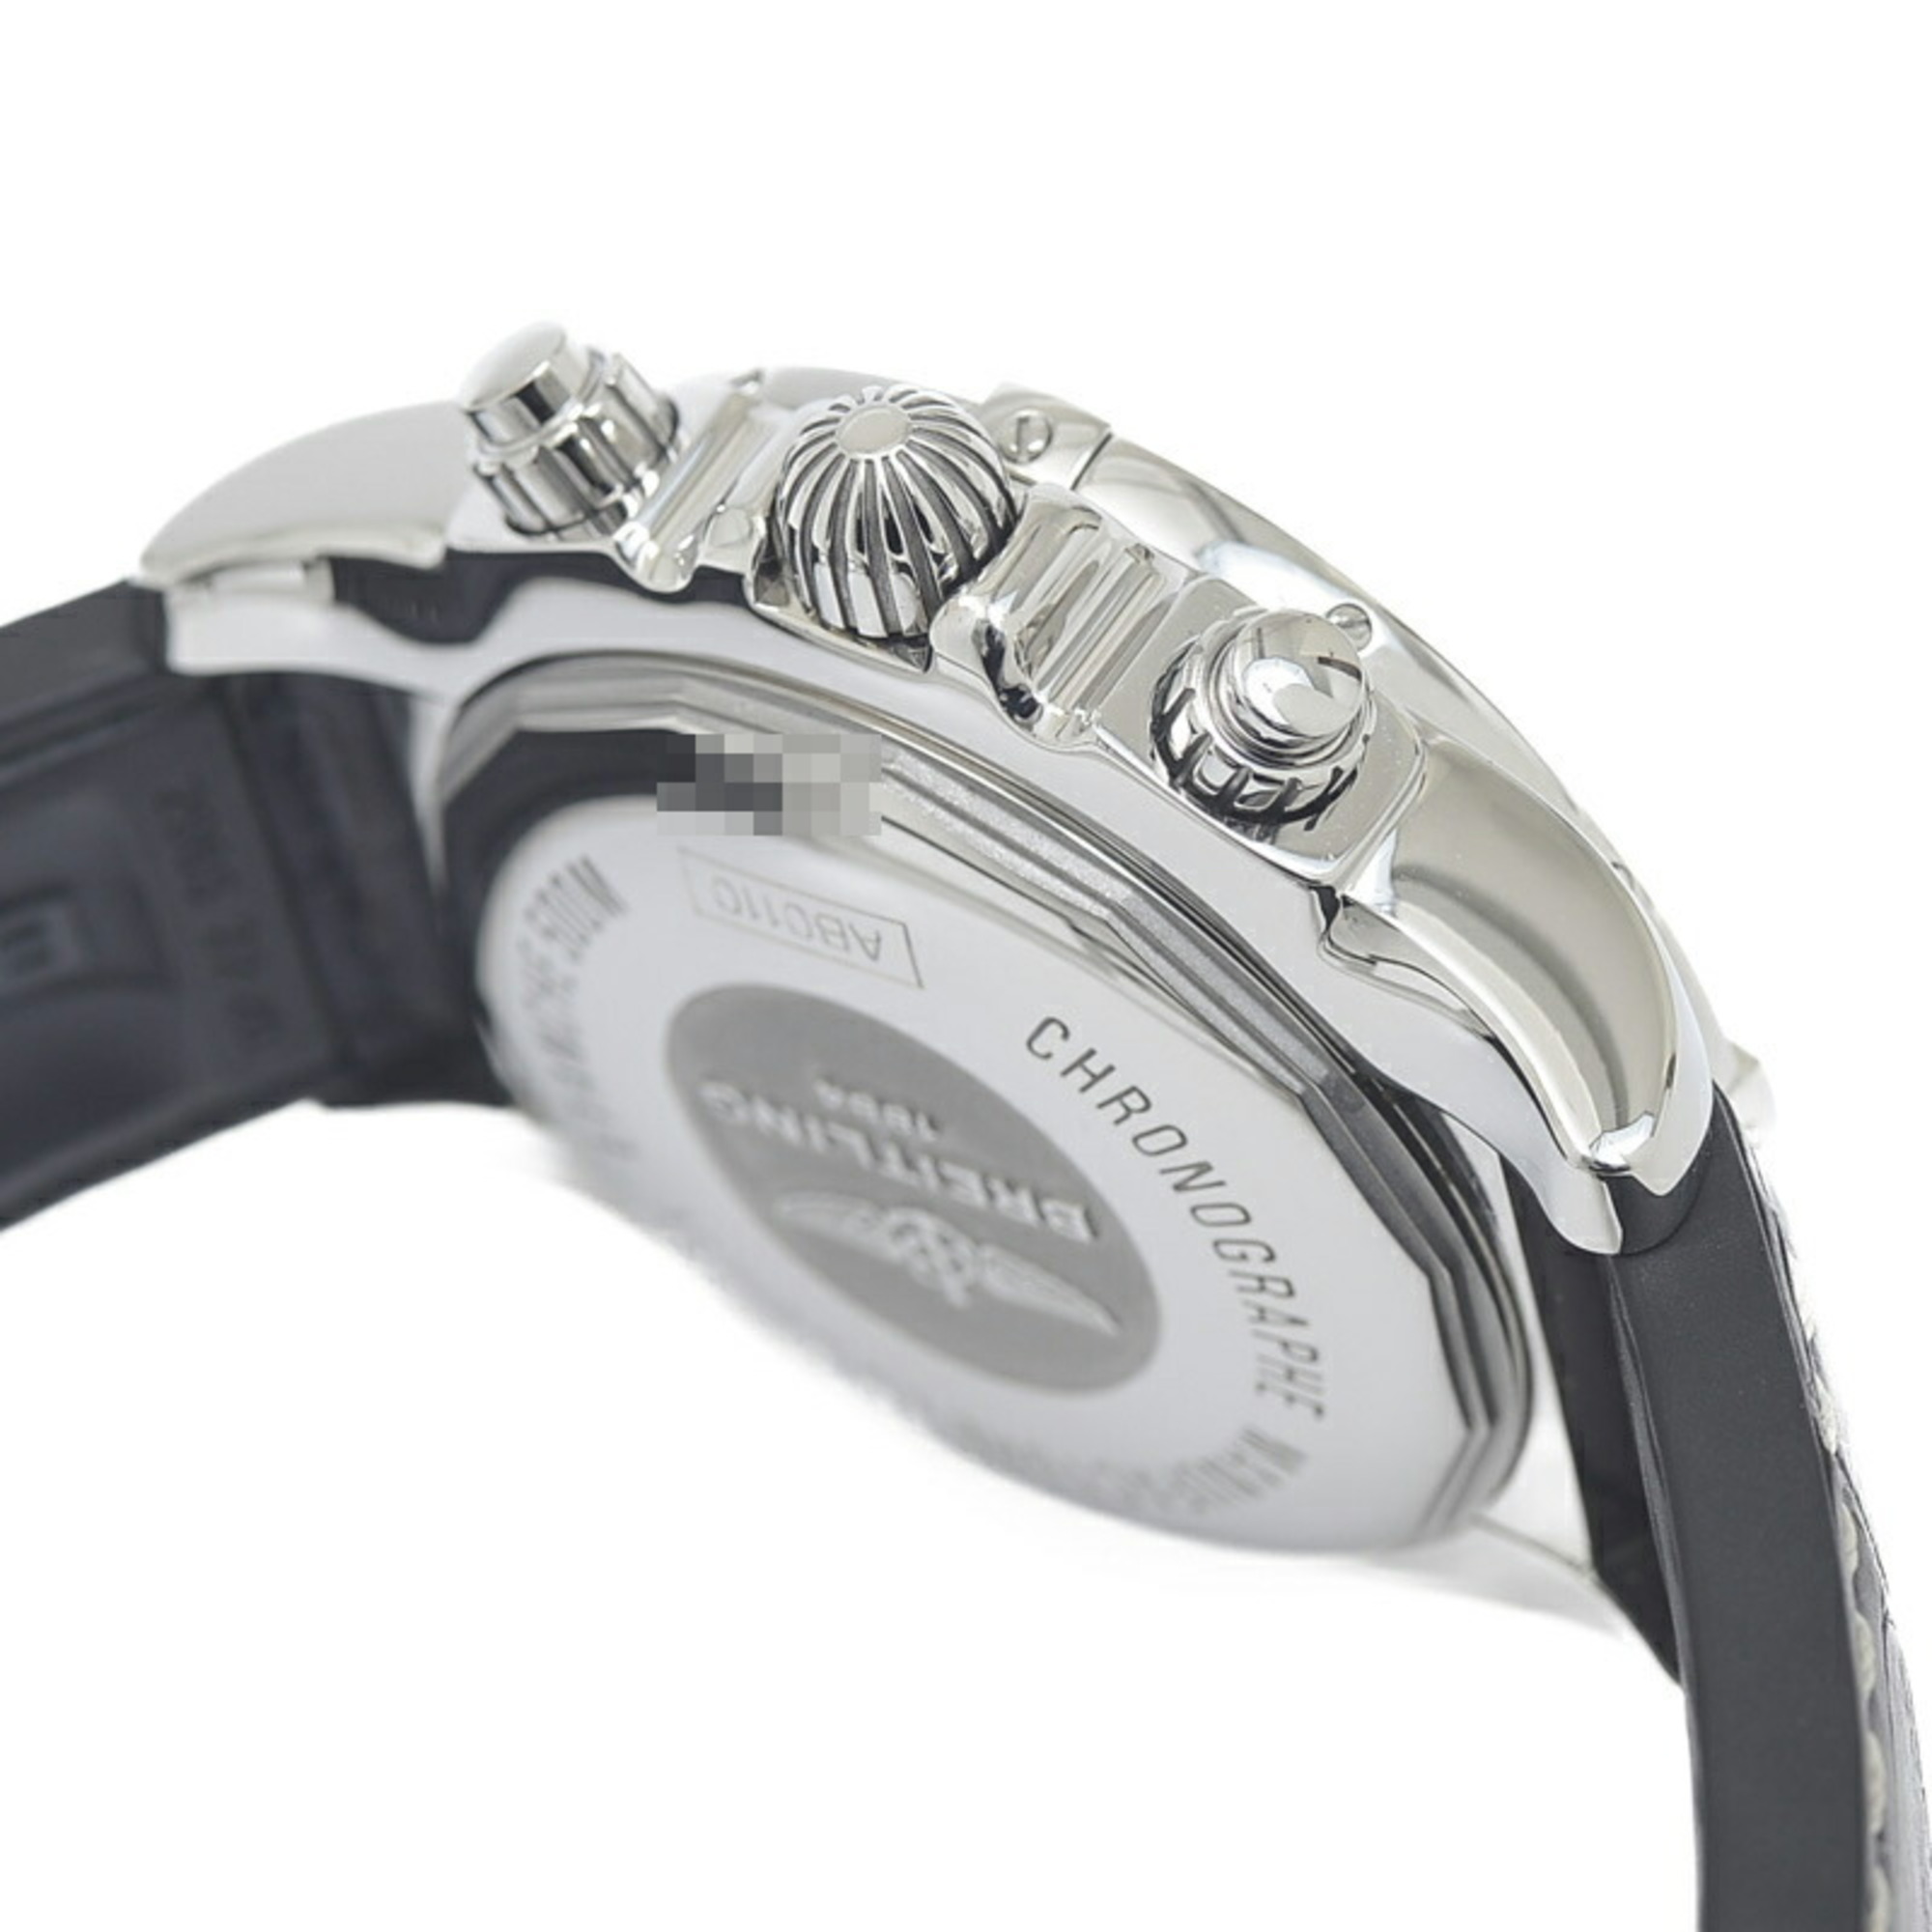 Breitling Chronomat 44 Chronograph Diamond Index Black Dial Automatic AB0110 Men's